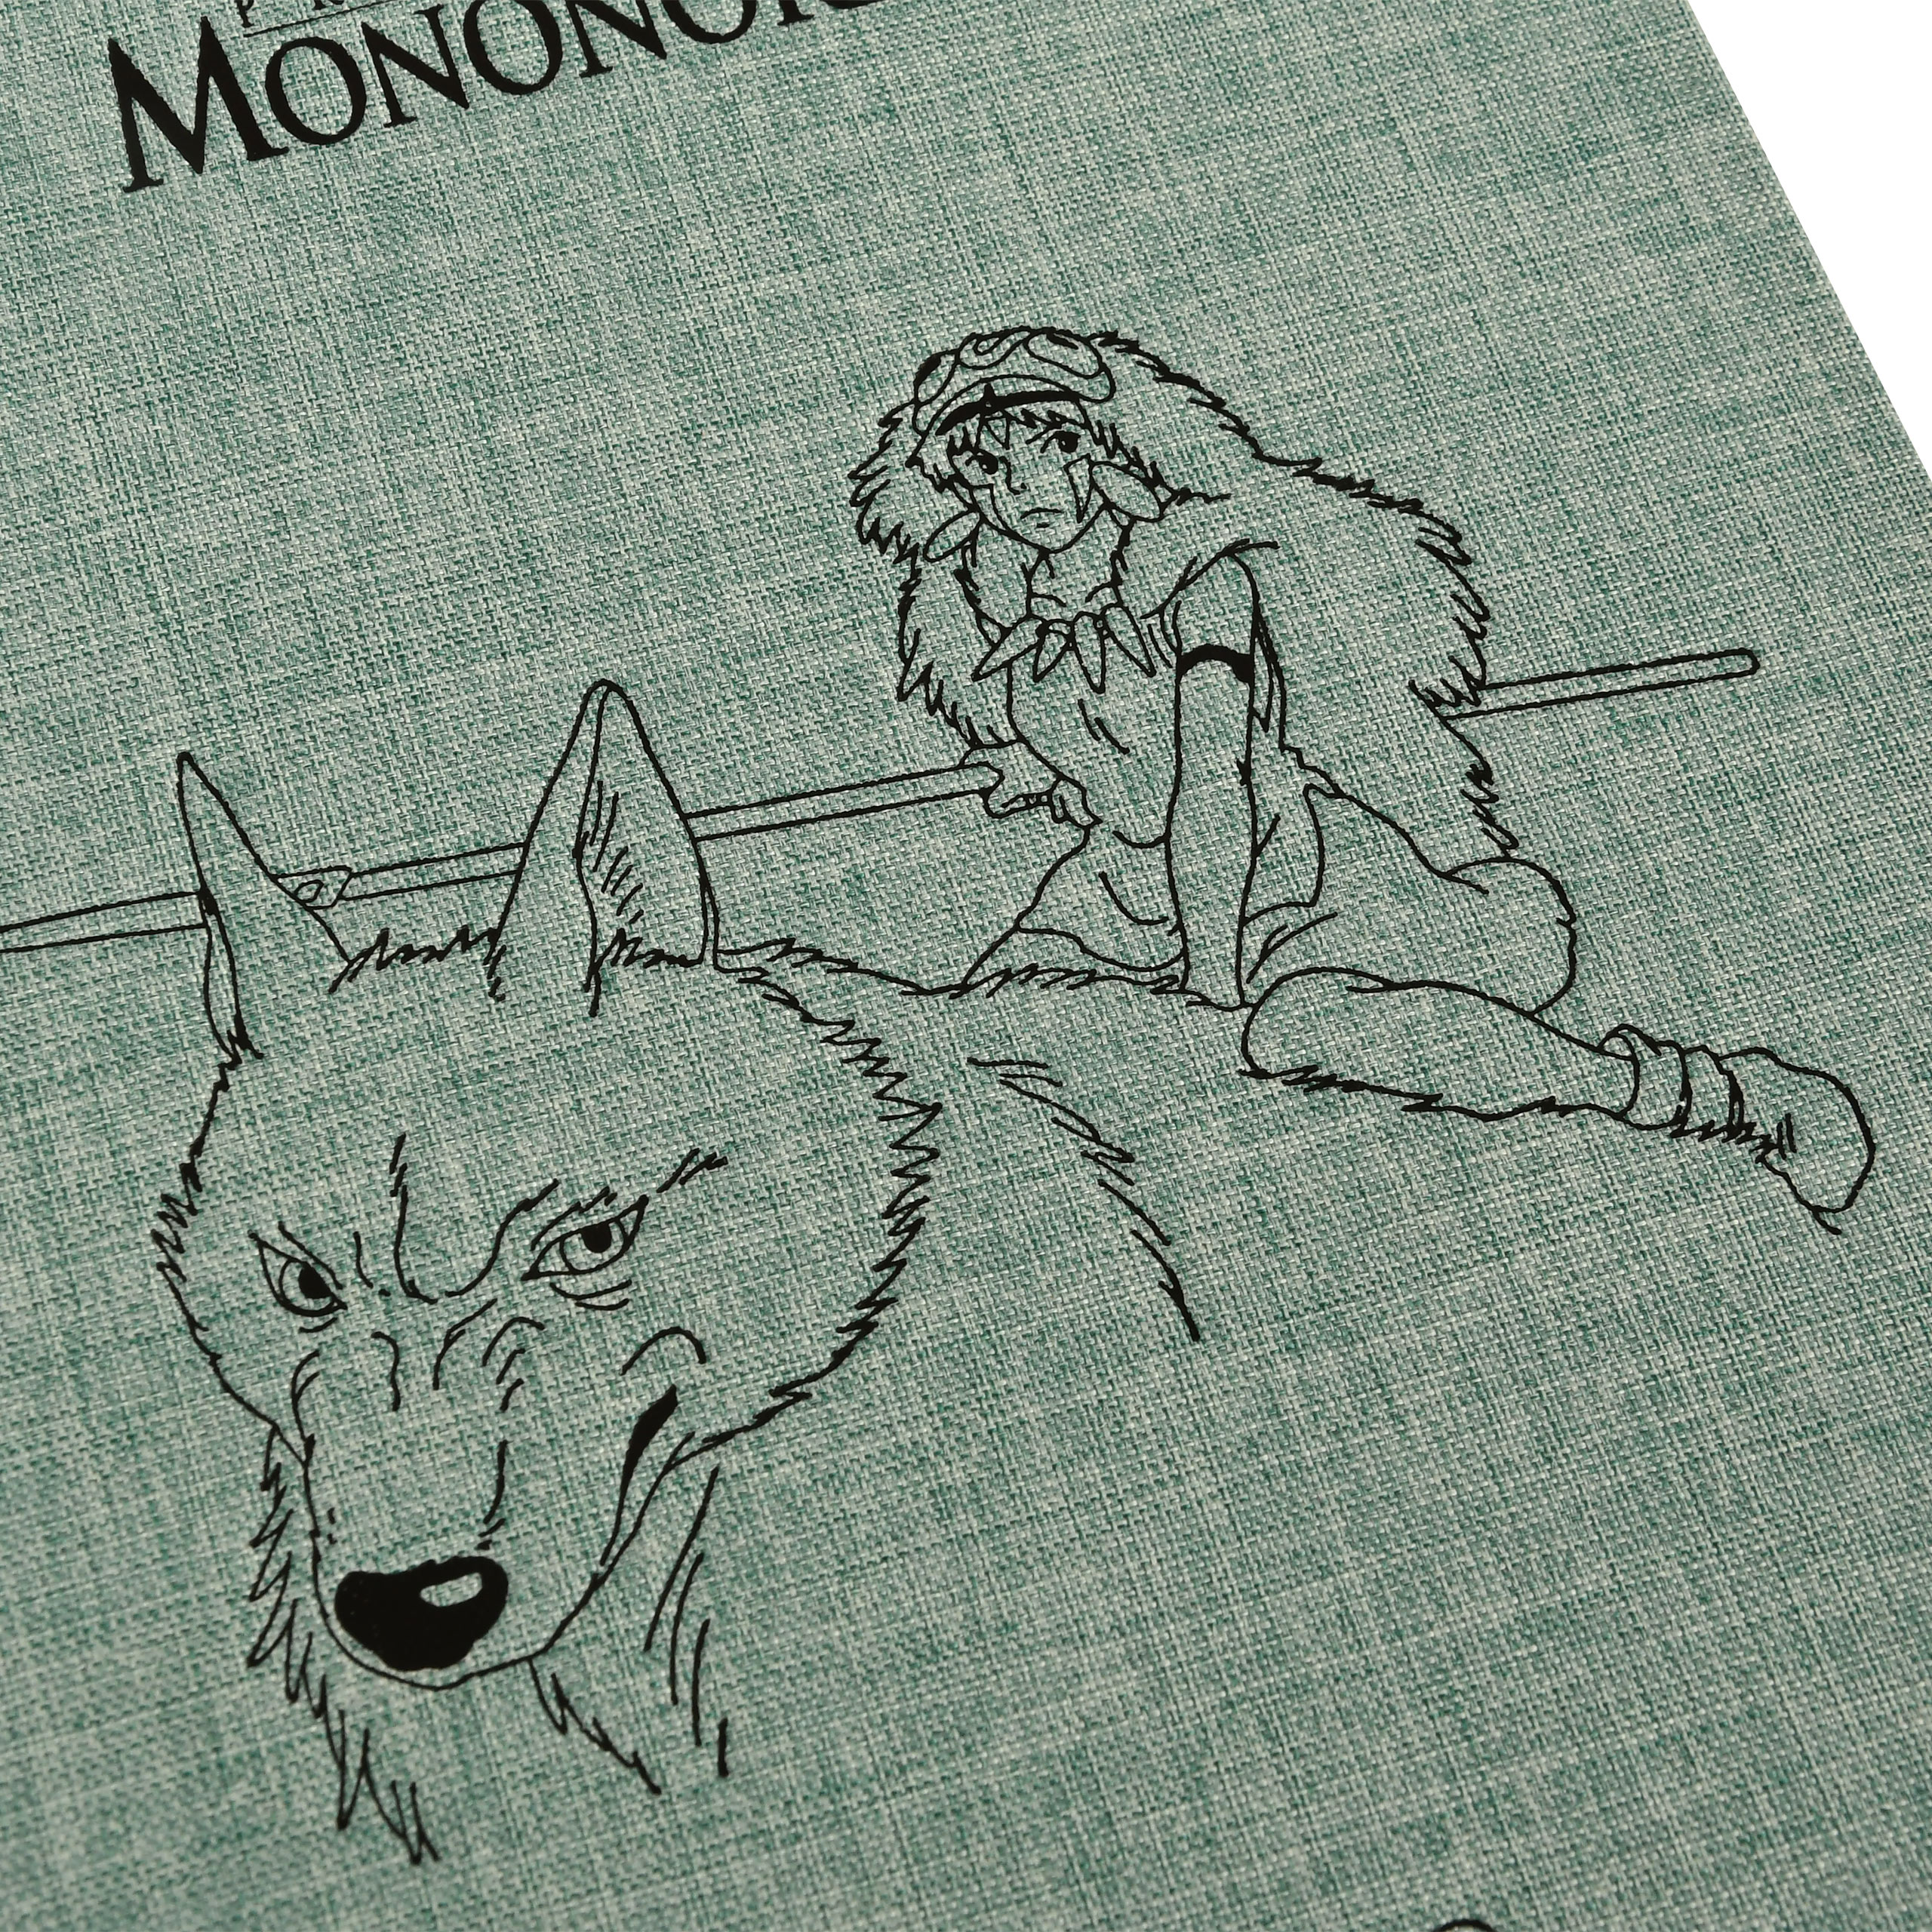 Princess Mononoke - Sketchbook